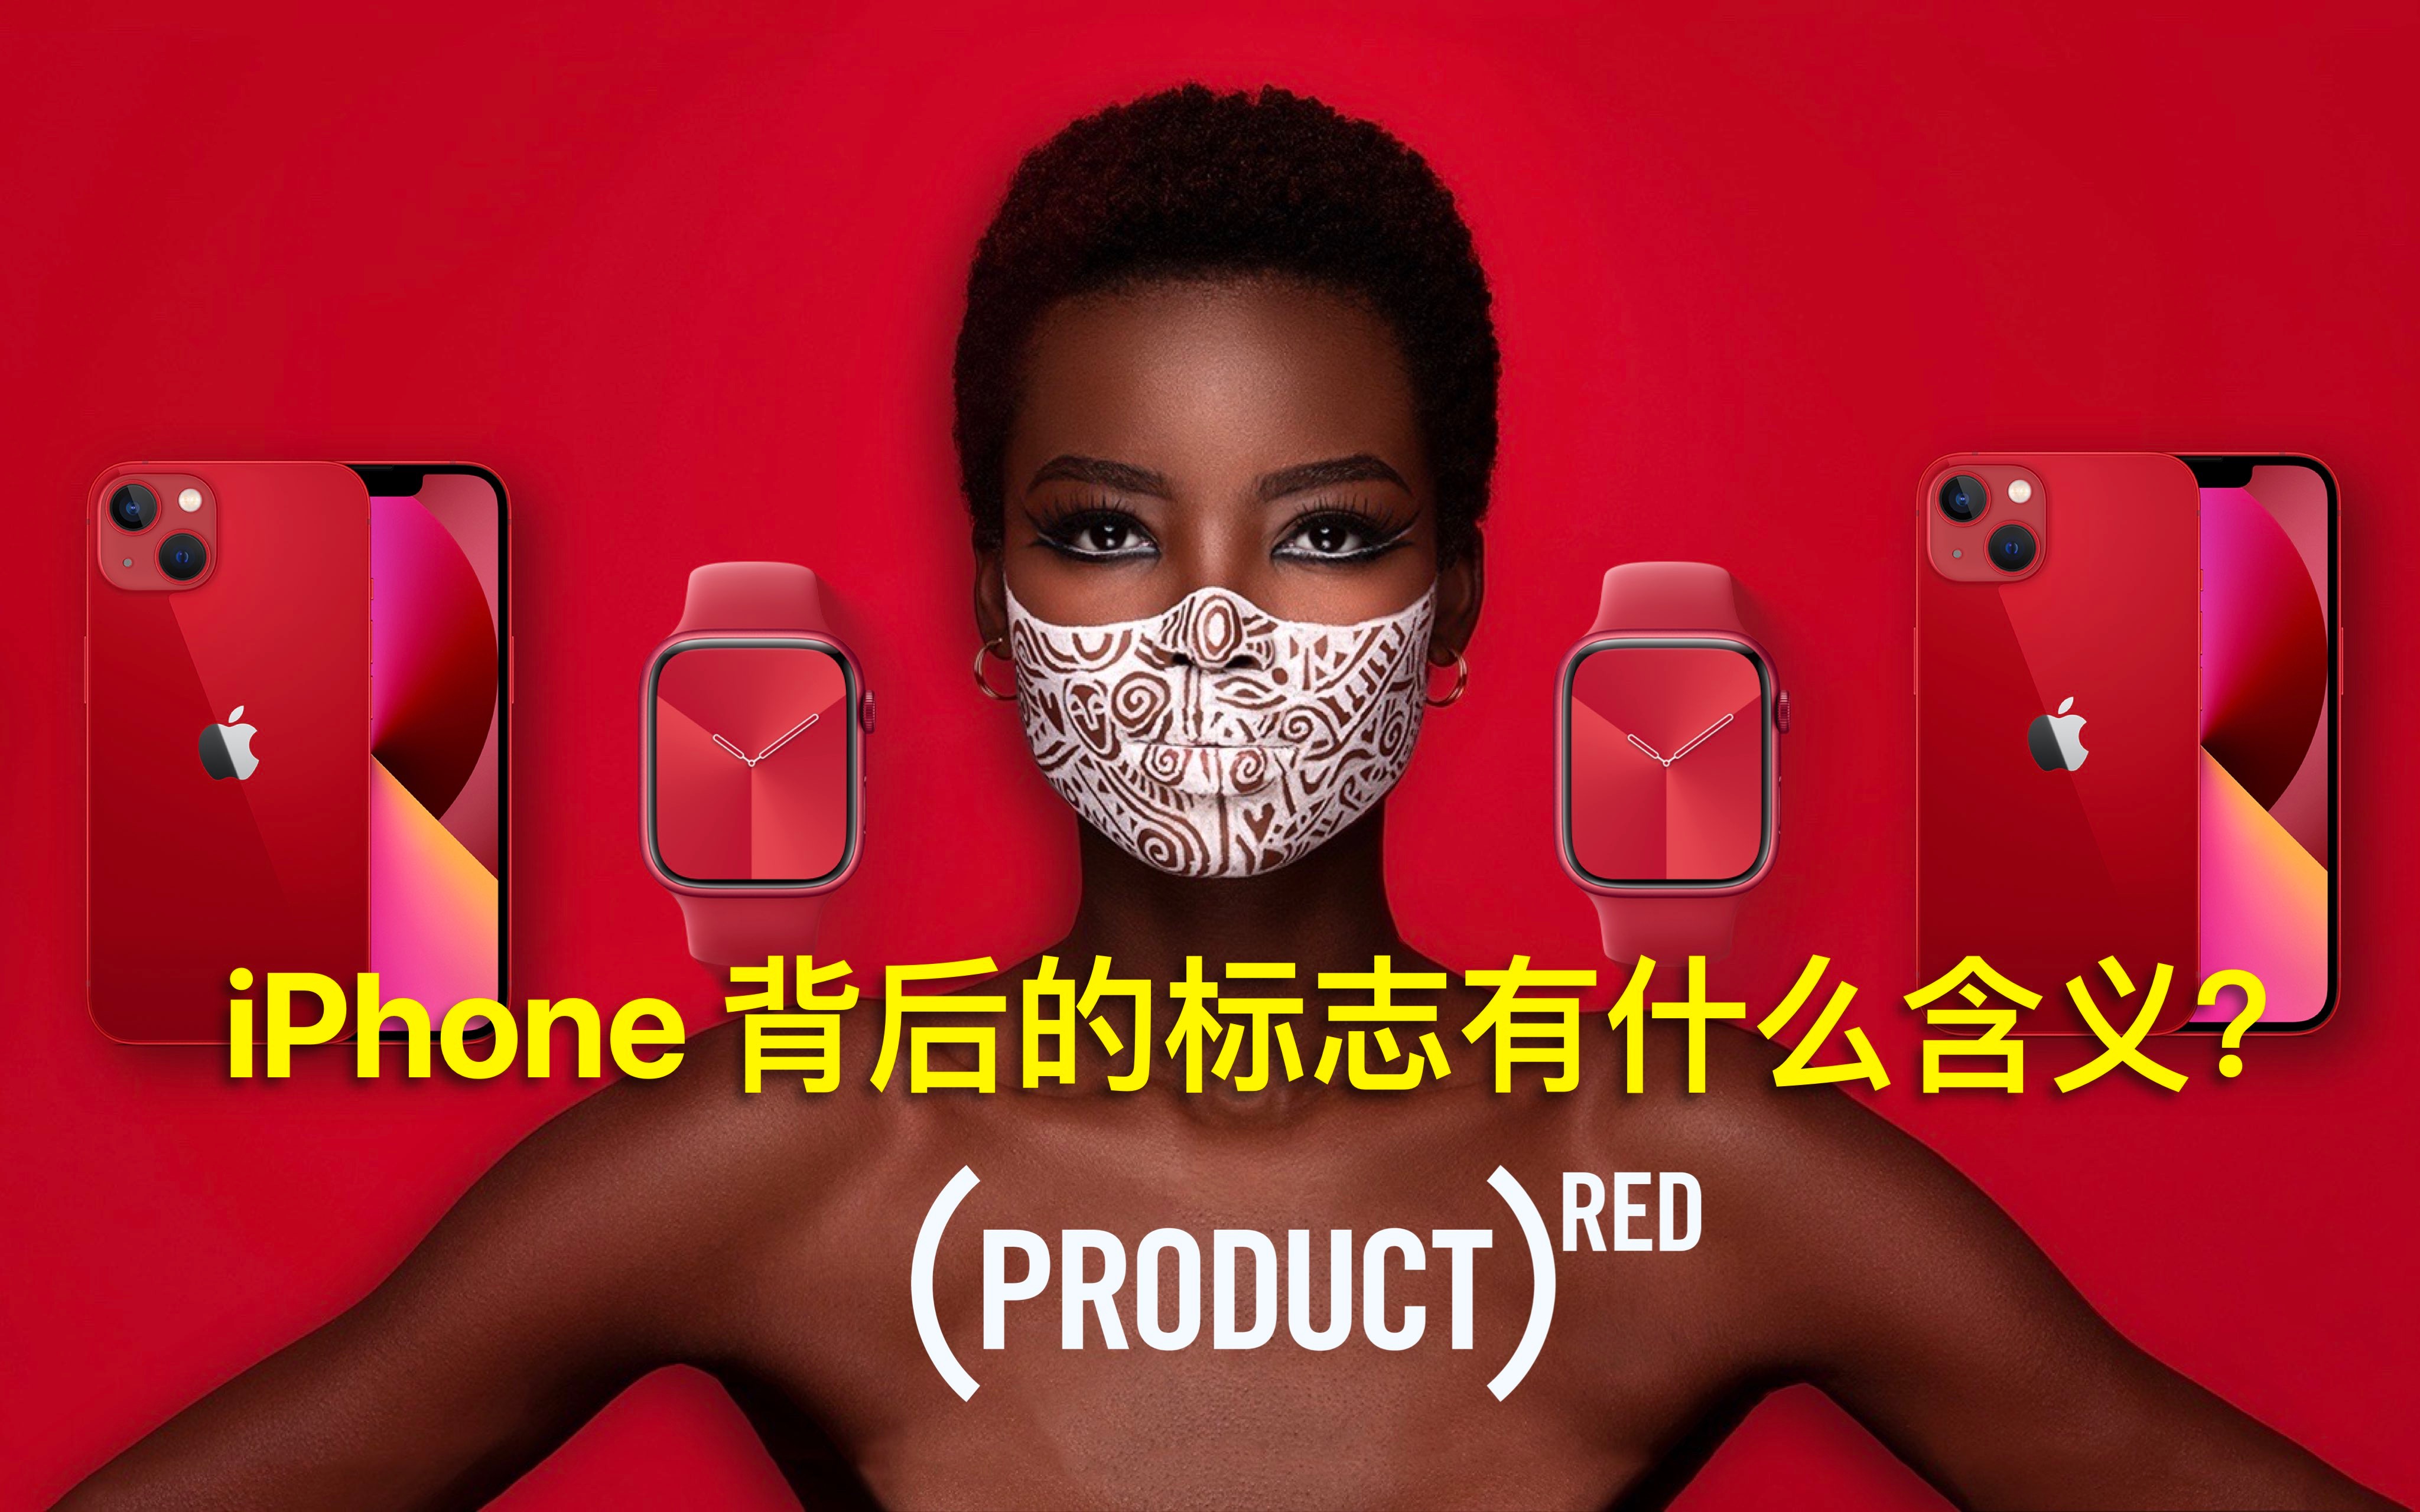 iPhone 背后的 Product Red 有什么含义？